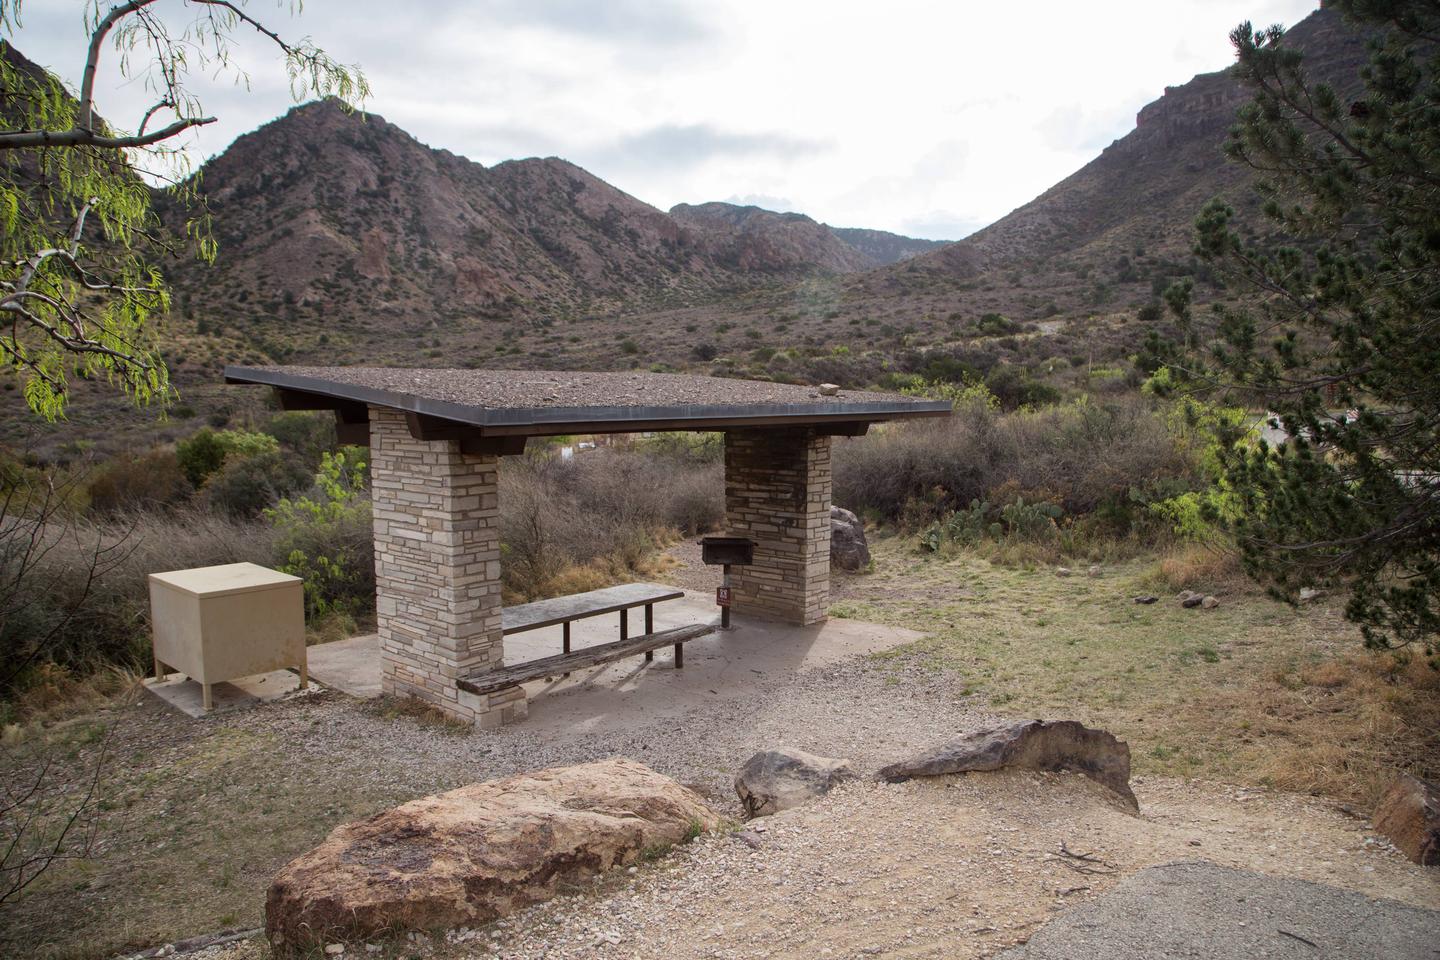 Chisos Basin Campsite #17 shade ramadaShowing bear box, picnic table, and grill